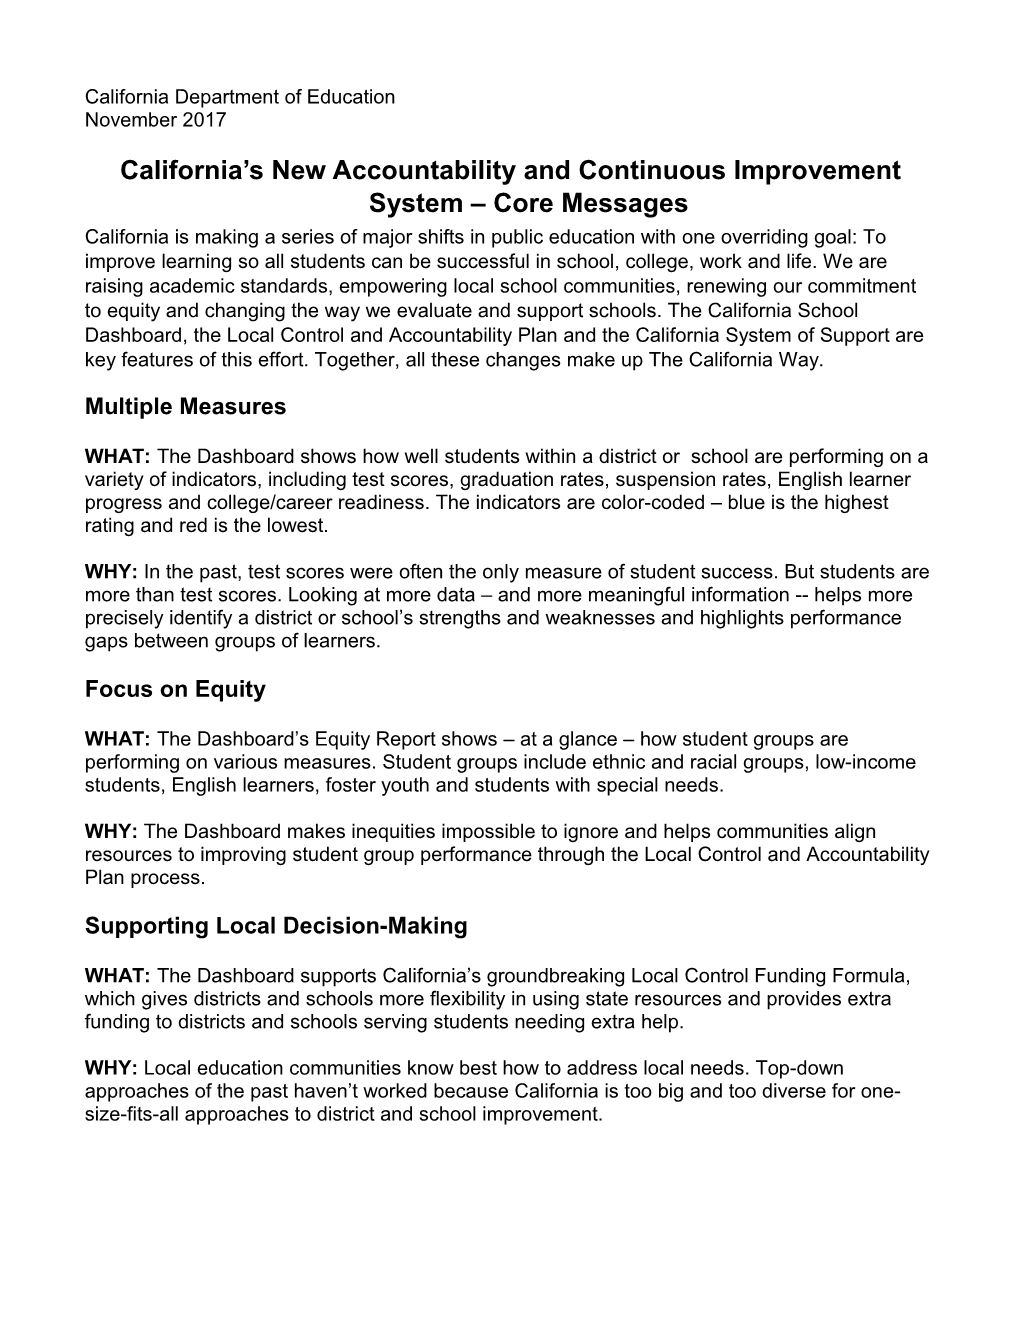 CA Dashboard Core Messages - California Accountability & School Dashboard (CA Dept of Education)